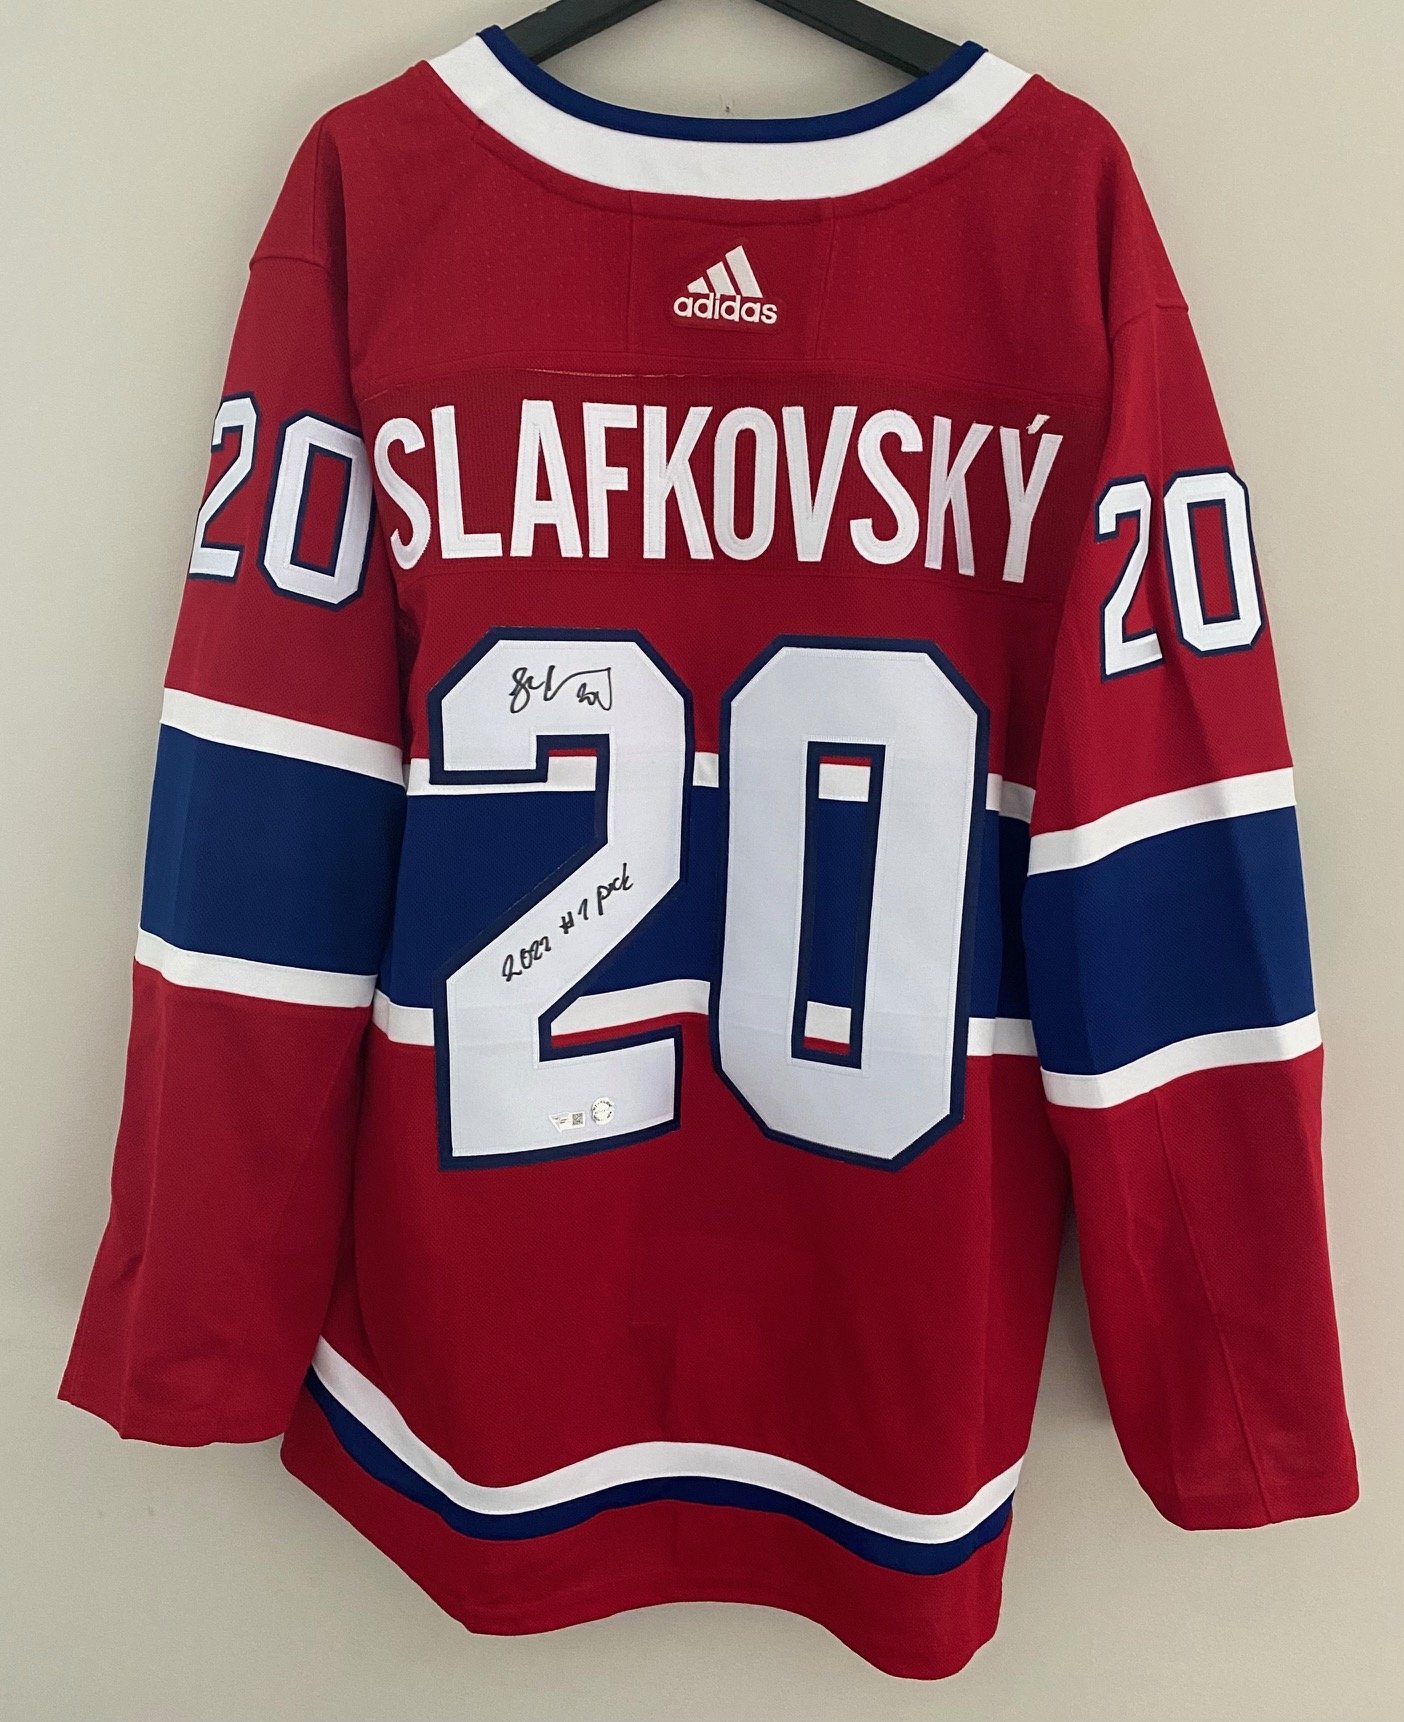 Juraj Slafkovsky Montreal Canadiens Signed Adidas Jersey with 2022 #1 Pick Note - Fanatics